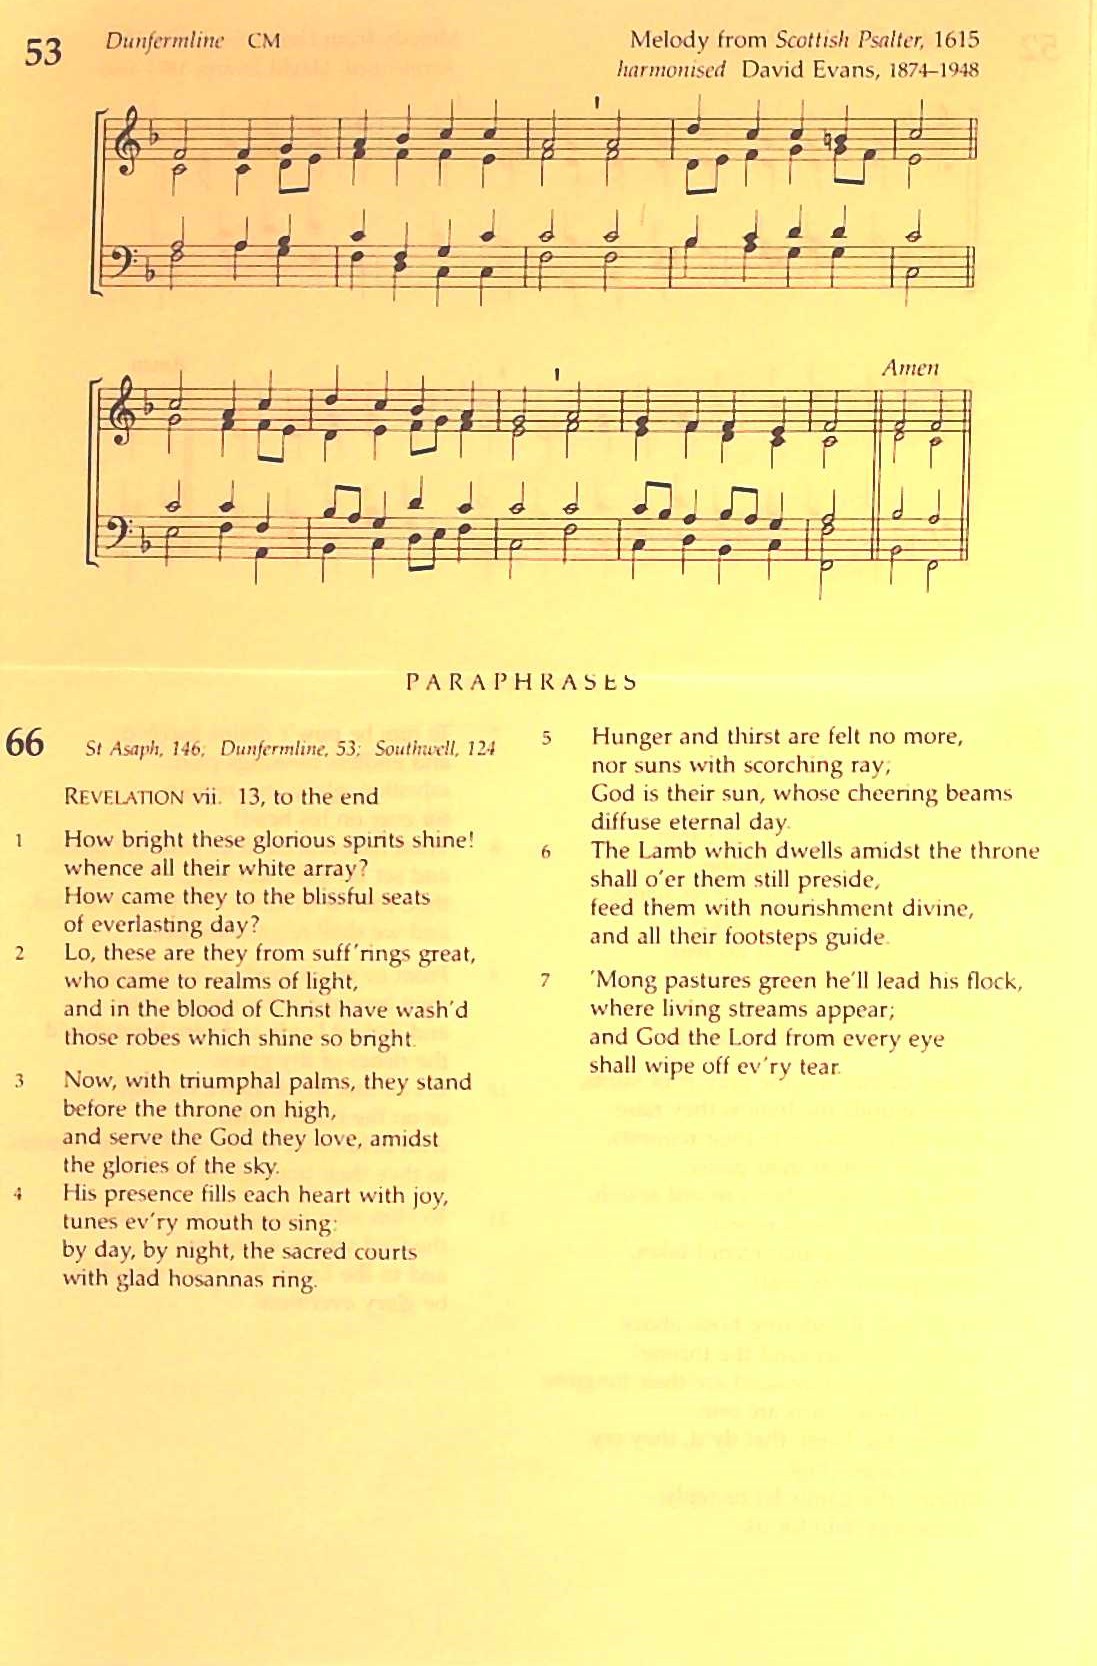 The Irish Presbyterian Hymbook page 757